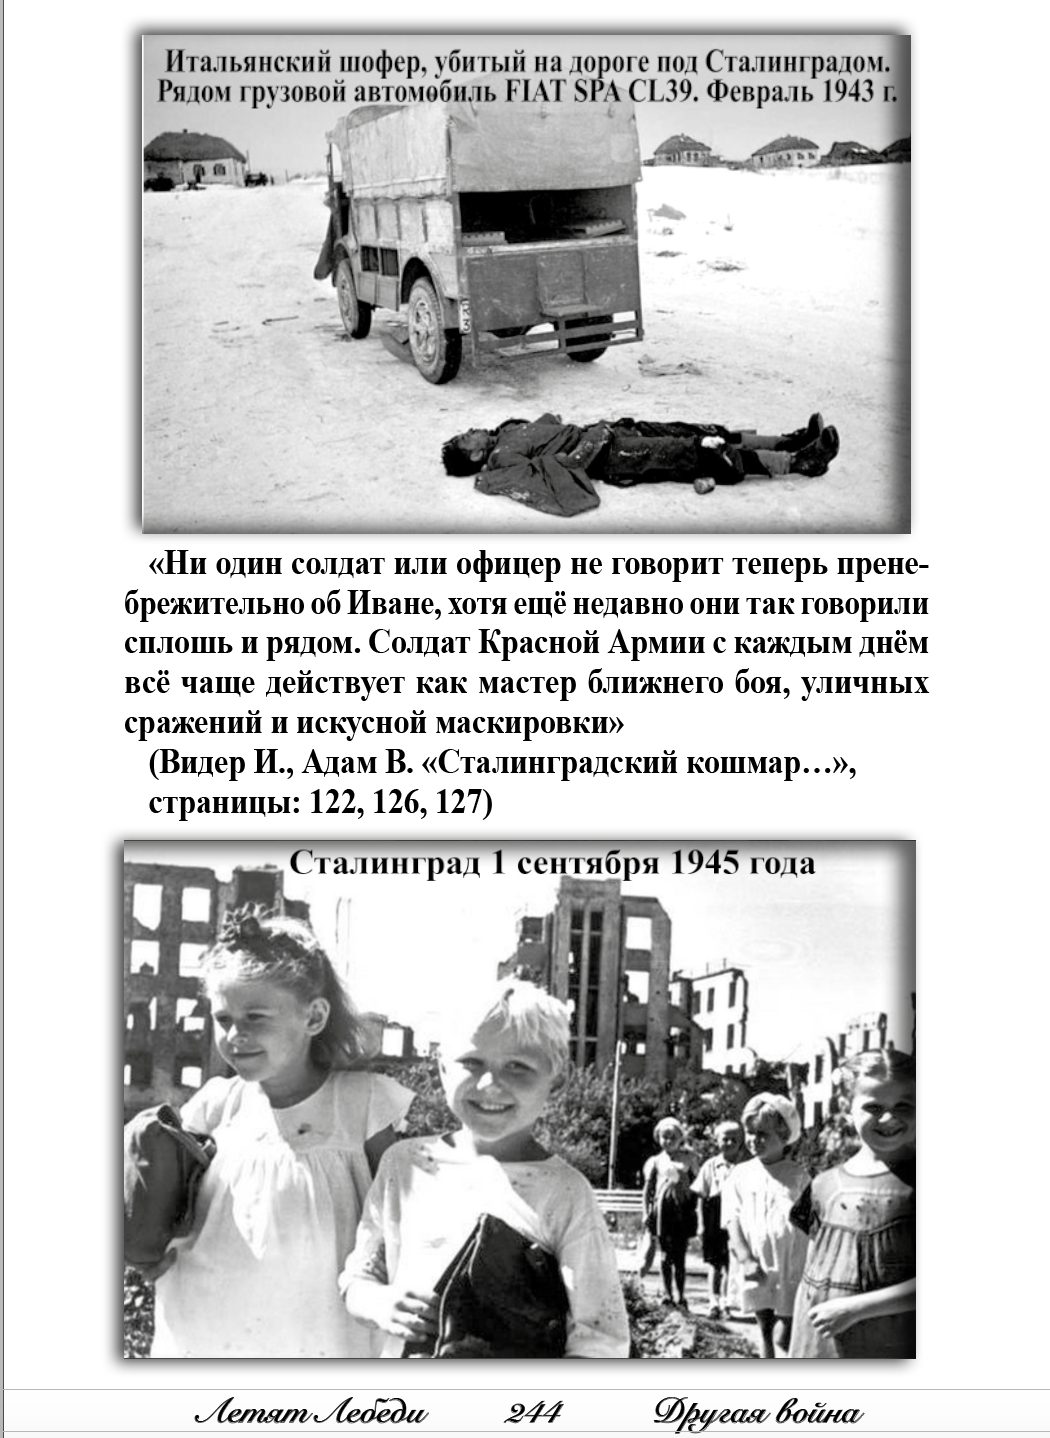 Stalingrad 1942-1943 - My, The Great Patriotic War, The Second World War, Stalingrad, Volgograd, Longpost